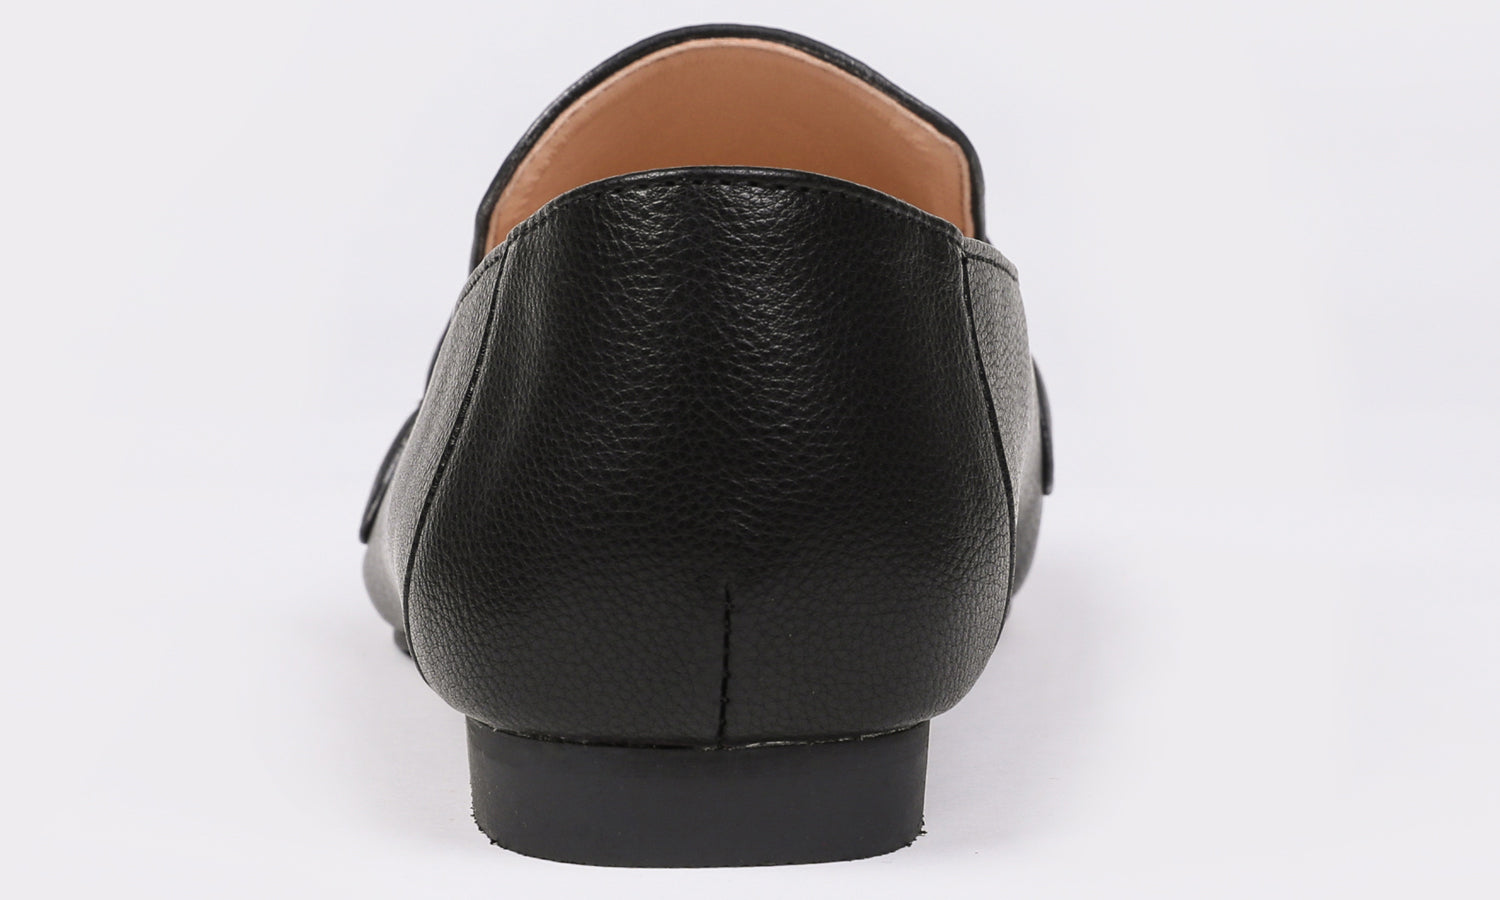 Feversole Women's Fashion Trim Deco Loafer Flats Black Vegan Leather